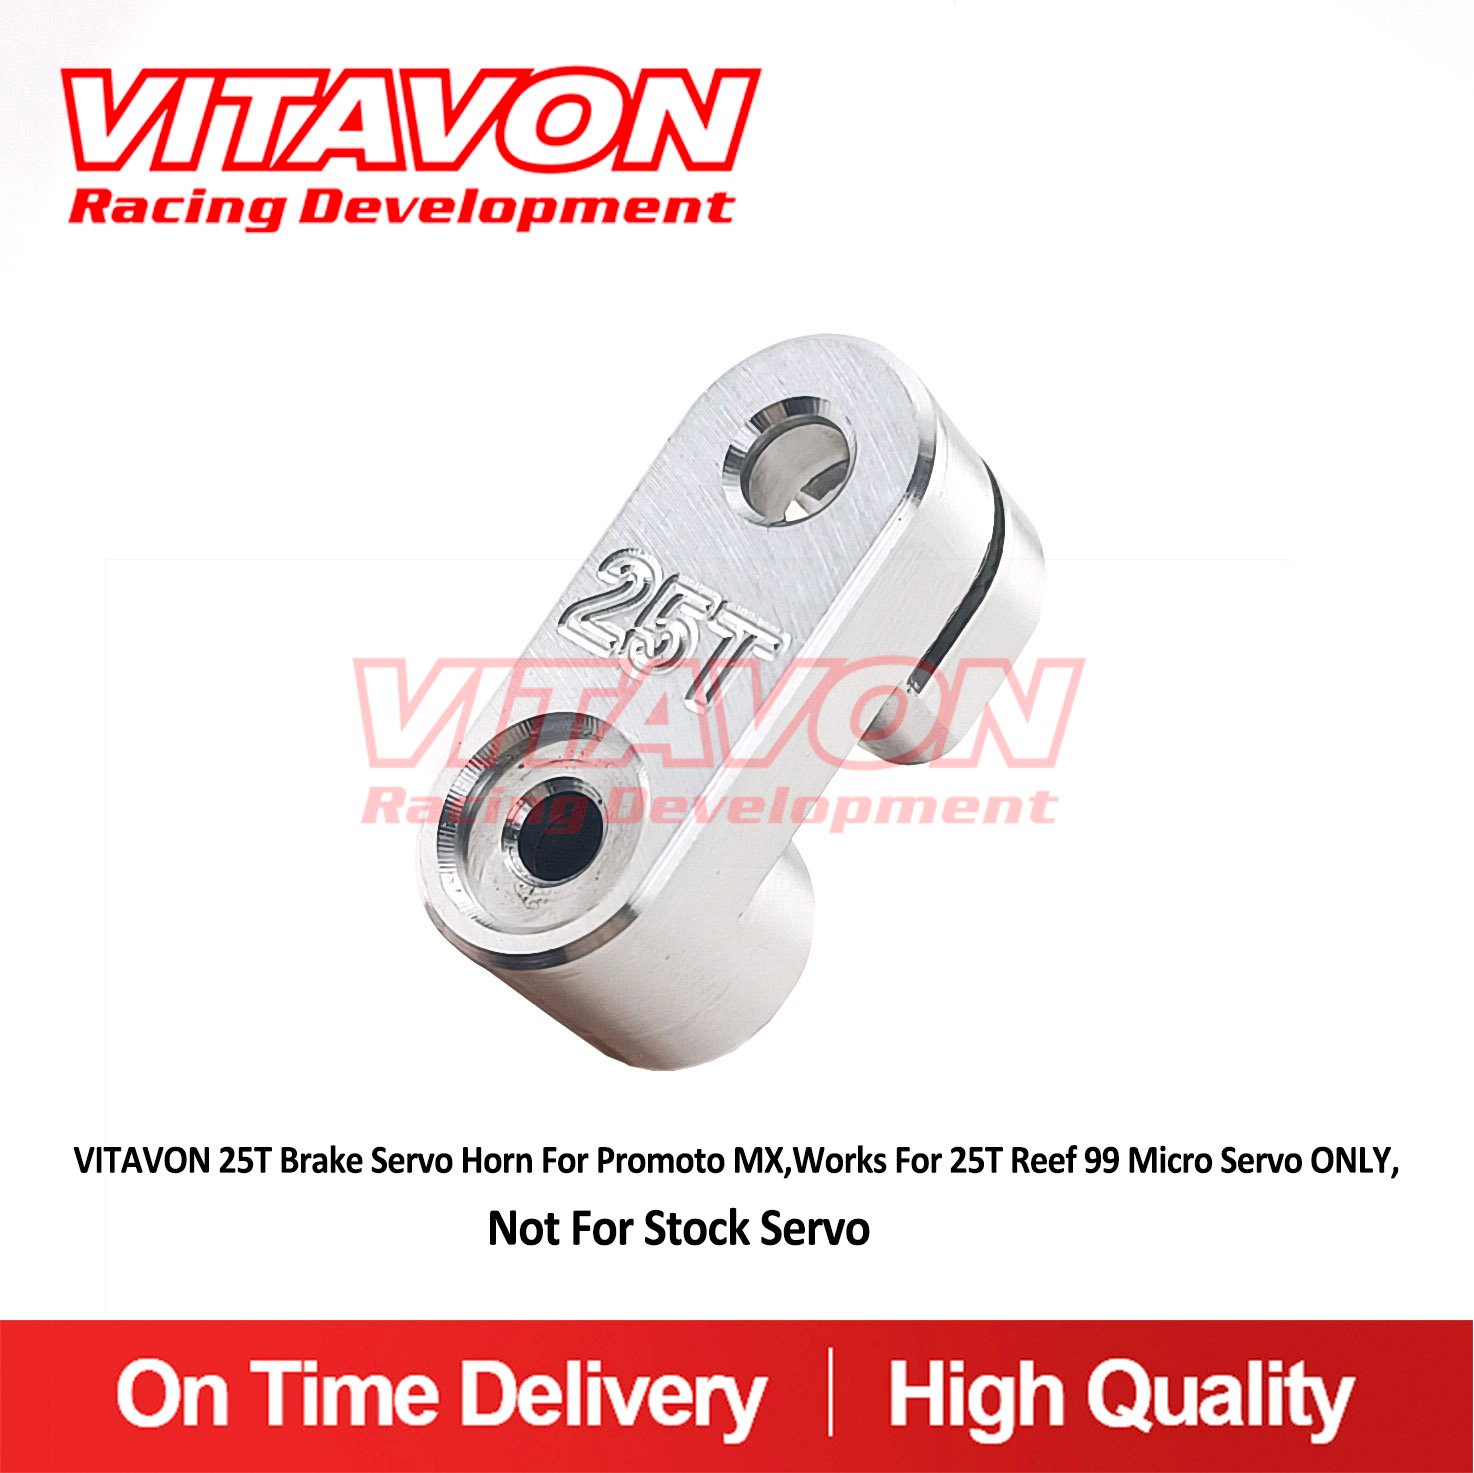 VITAVON 25T Brake Servo Horn For Promoto MX,Works For 25T Reef 99 Micro Servo ONLY, Not For Stock Servo